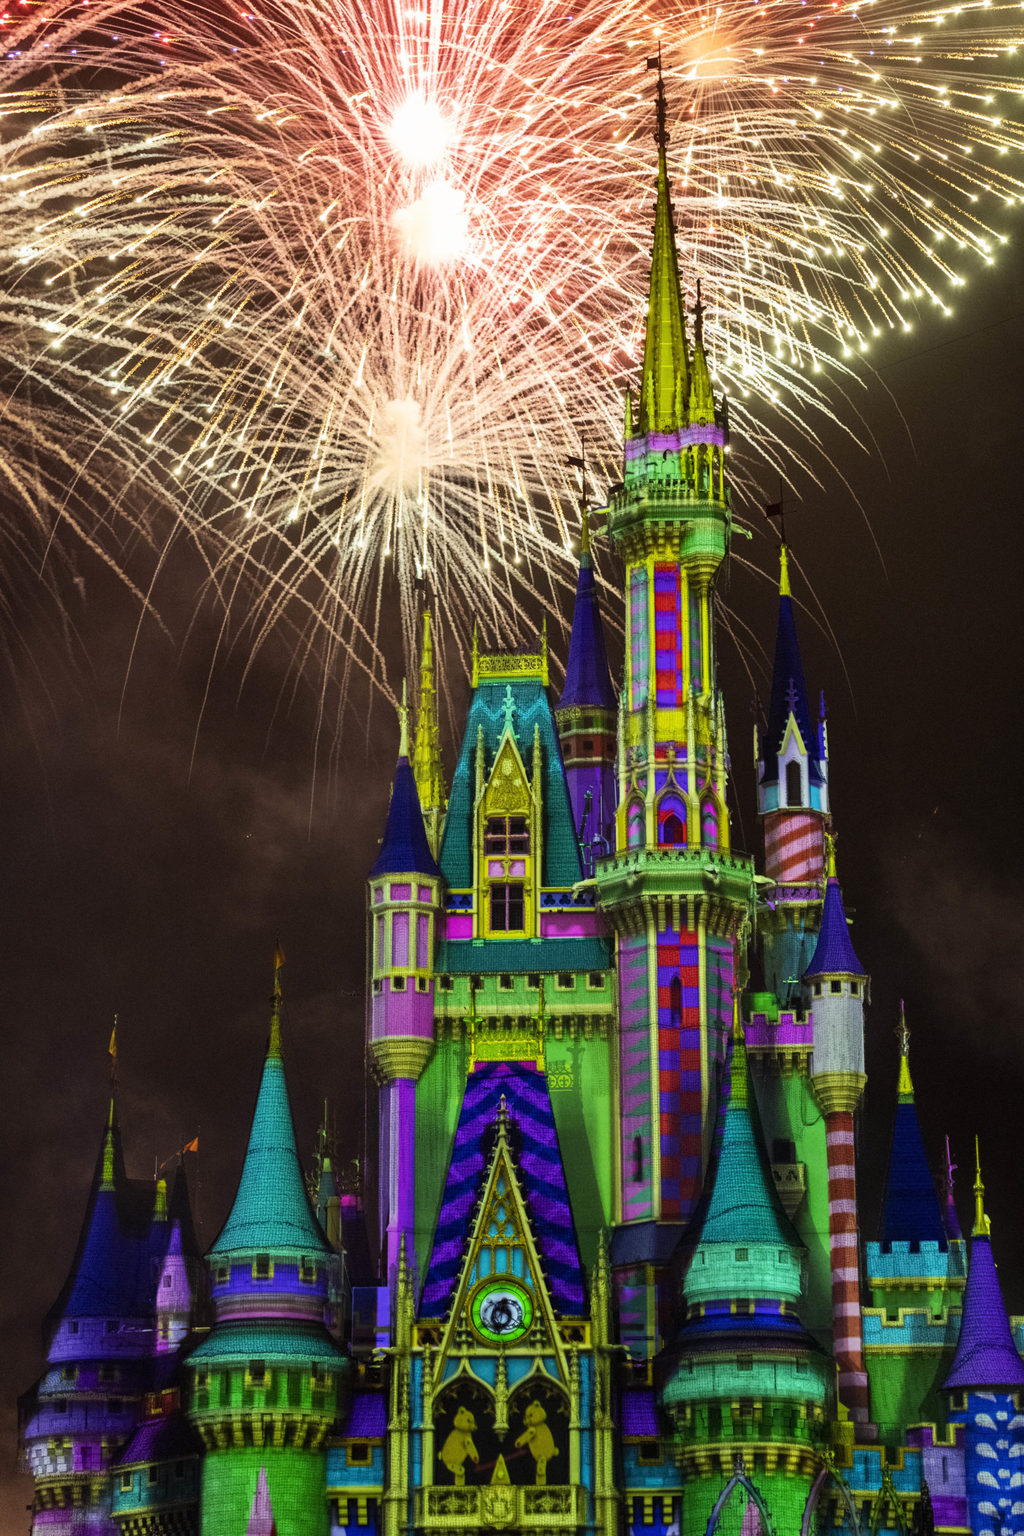 Minnie's Wonderful Christmastime Fireworks